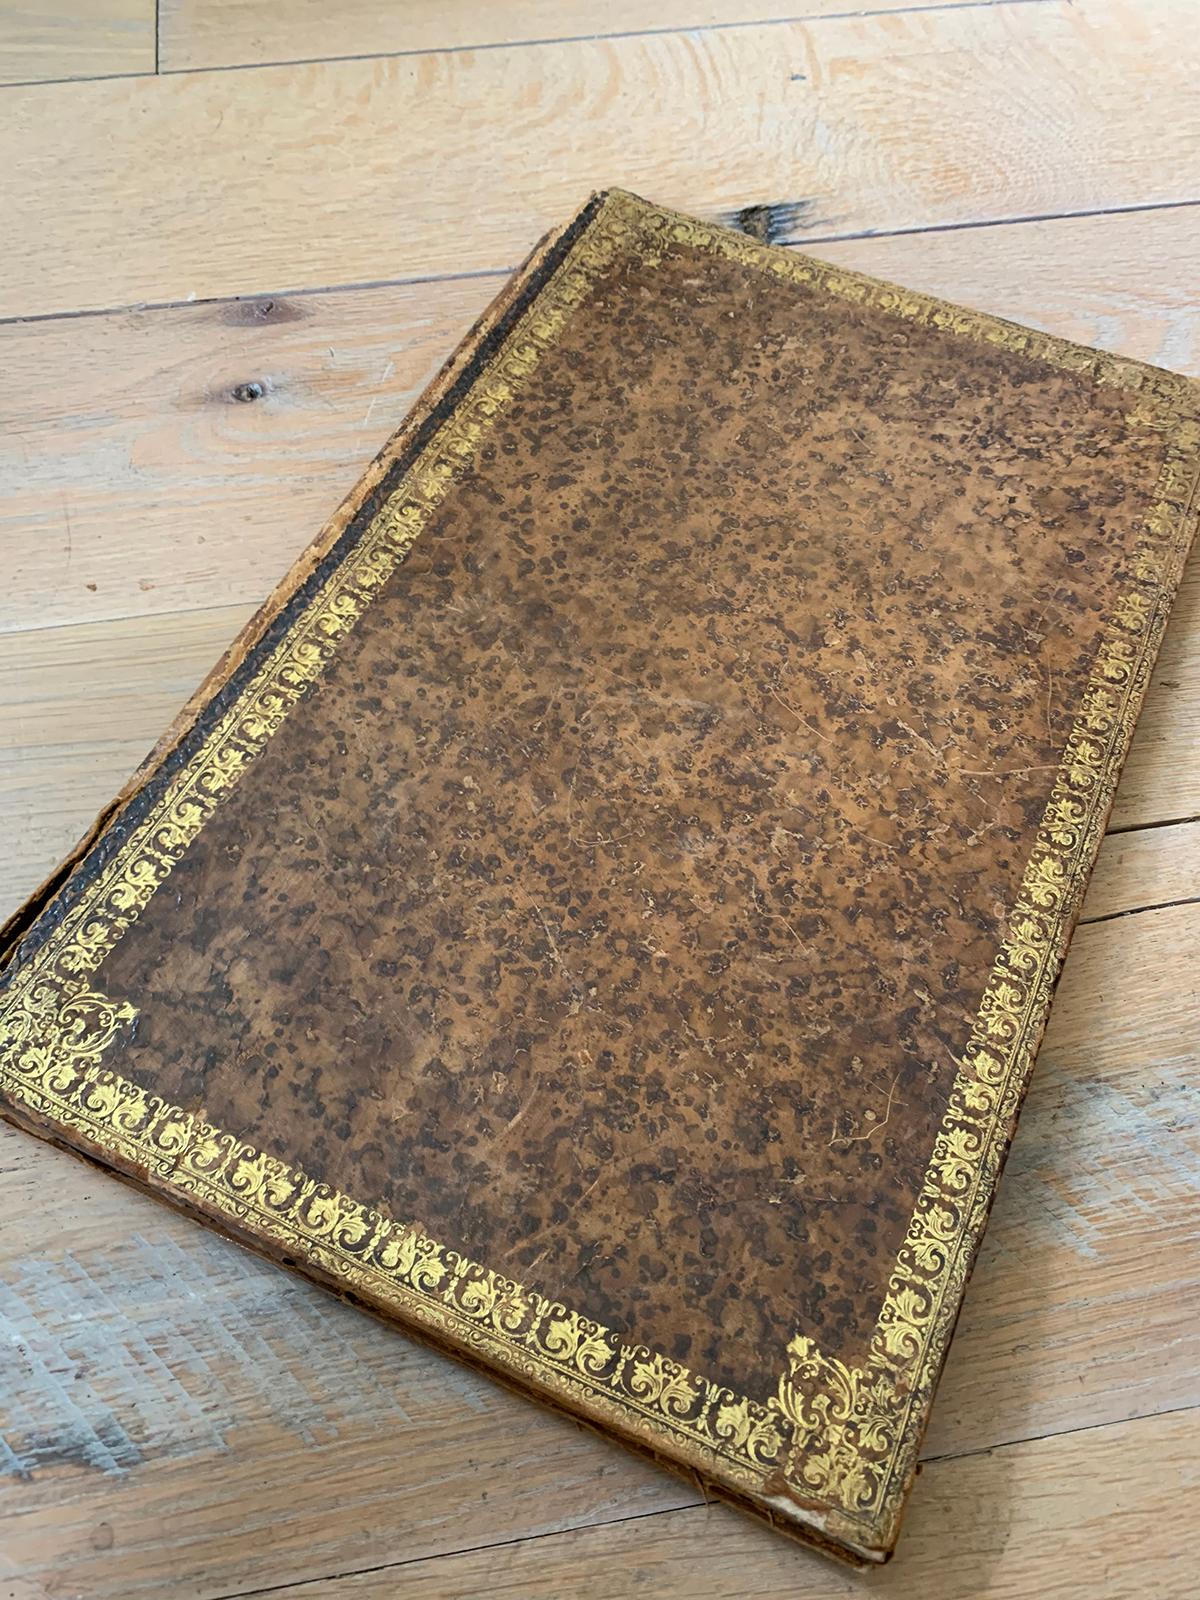 19th-20th Century French Leather Folio 1